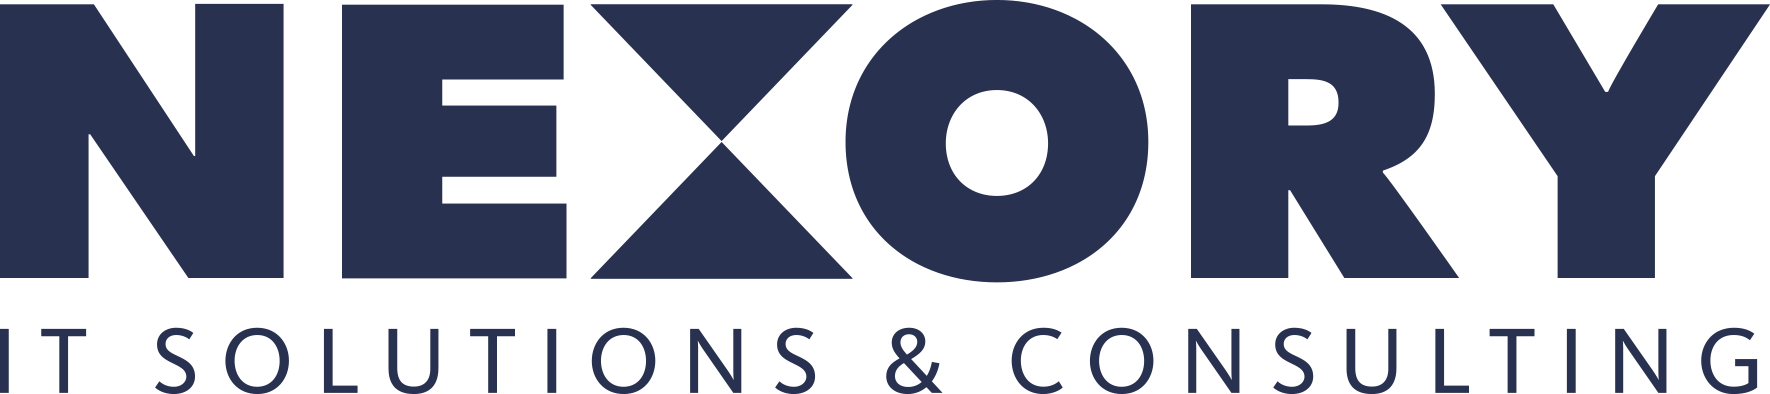 Nexory GmbH logo